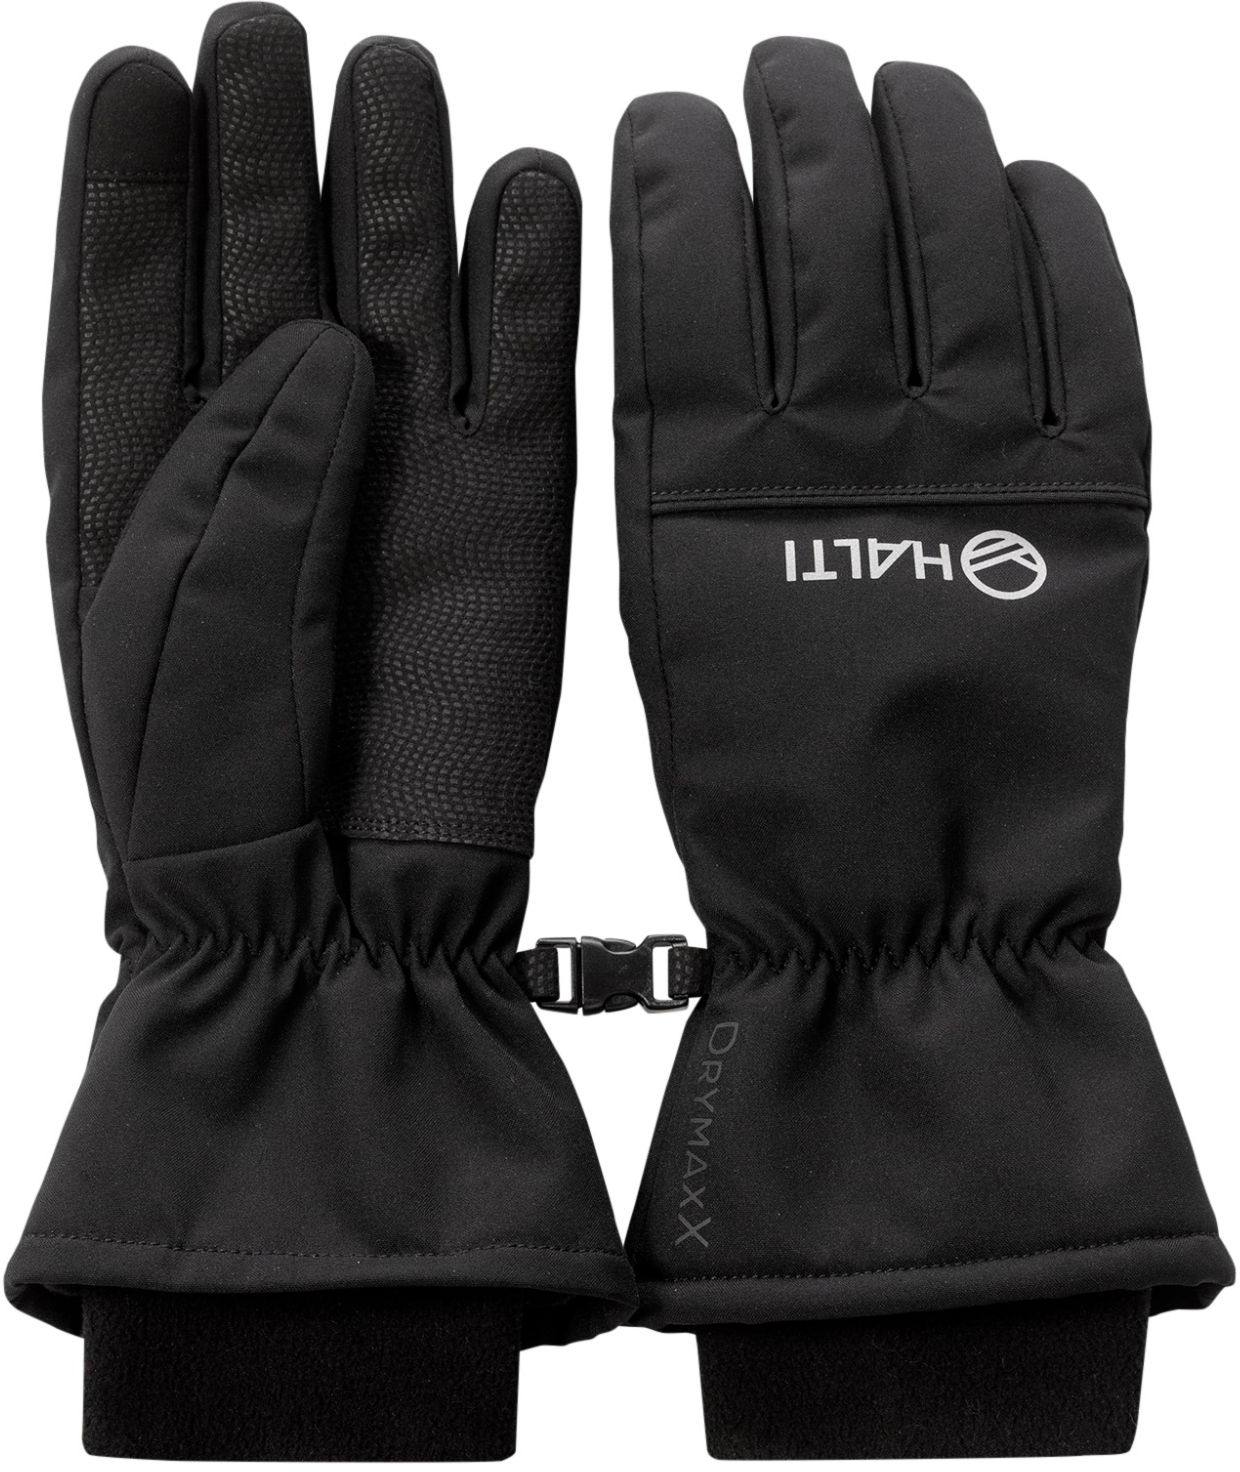 Halti Alium DX Gloves Black L